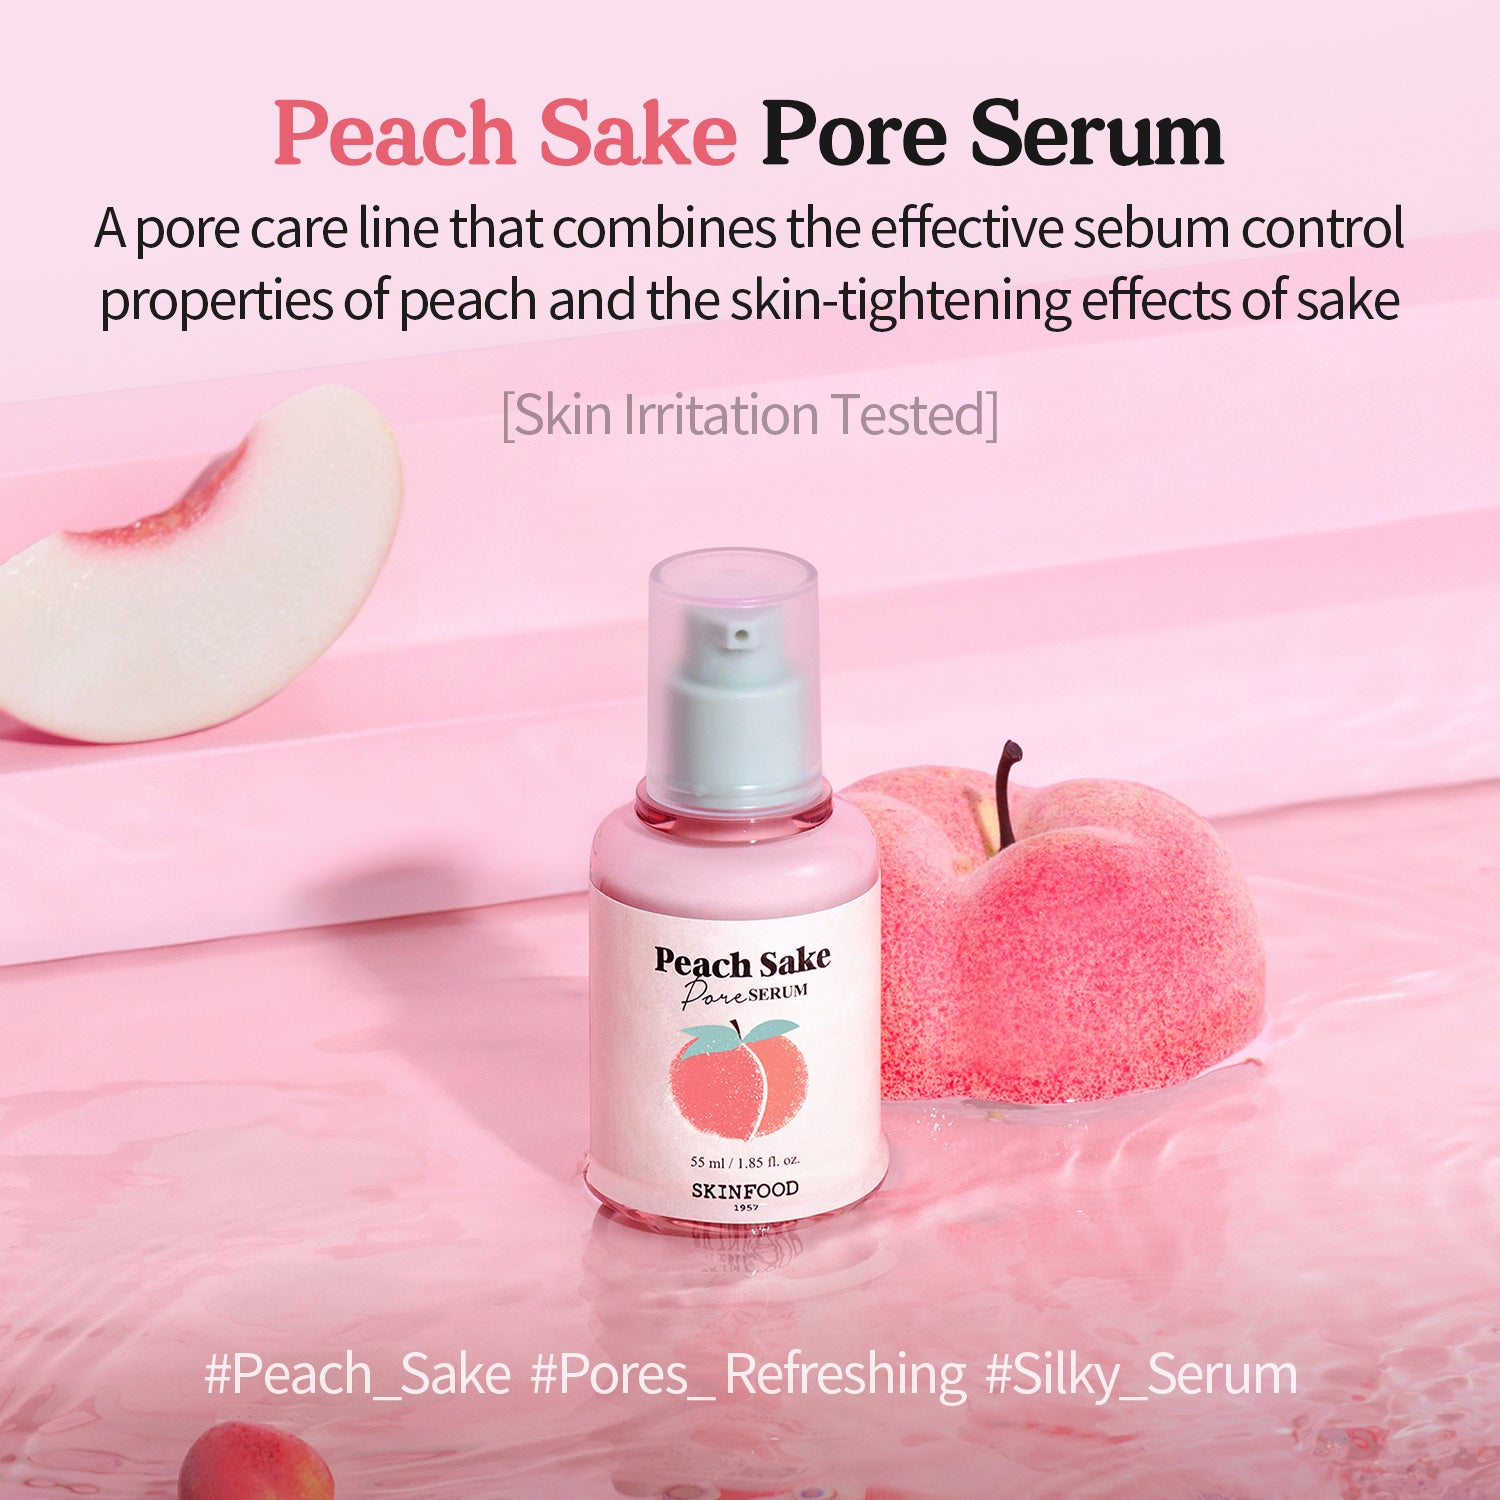 Peach Sake Pore Serum | Skinfood US Official